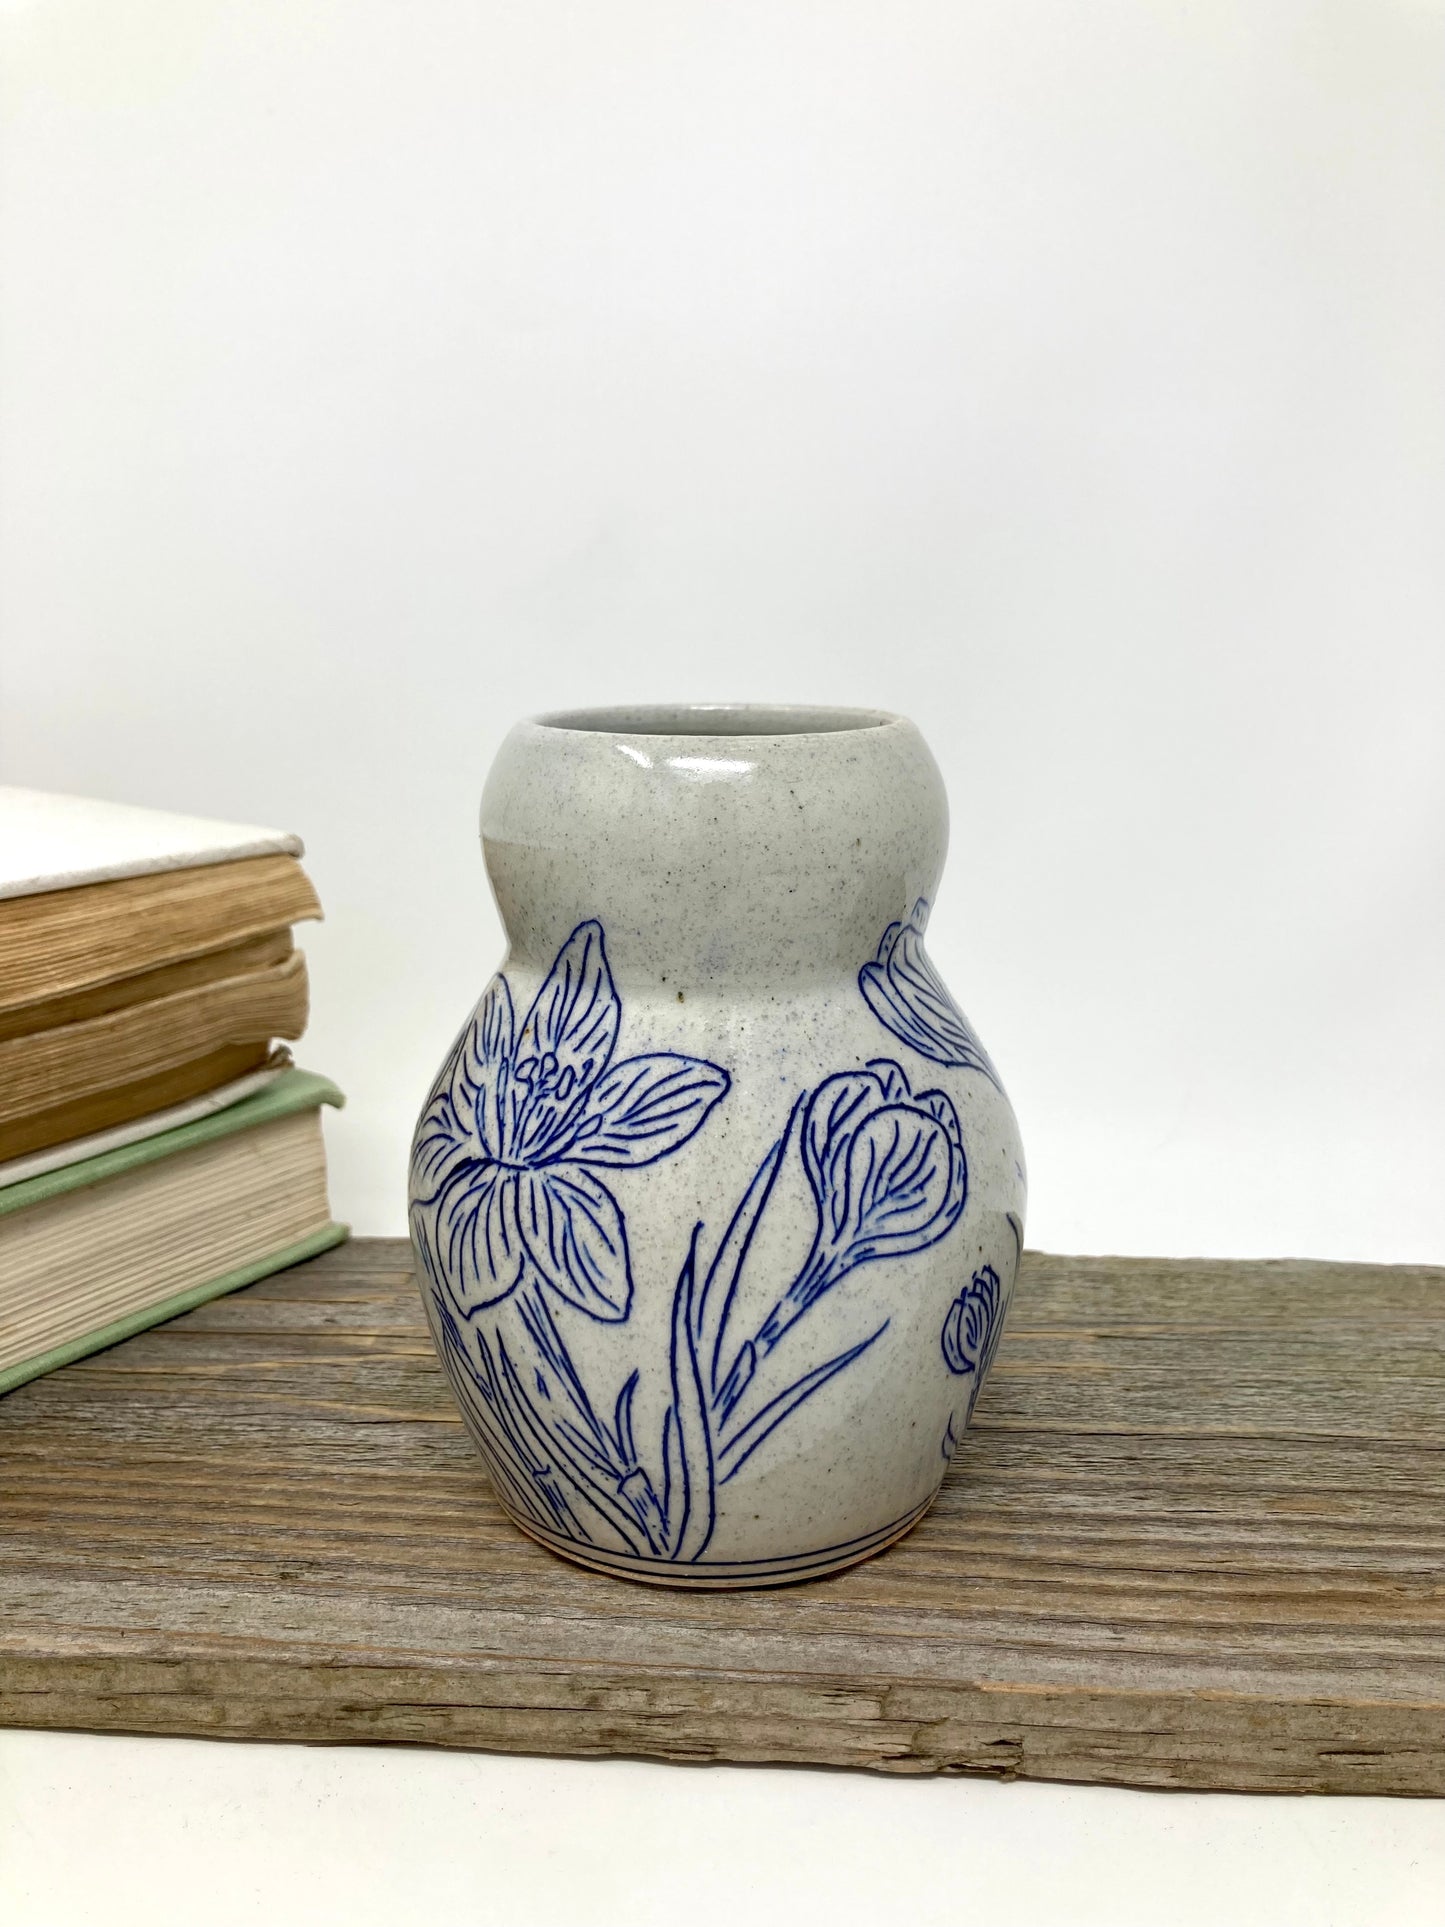 Crocus Flower Bud Vase in Blue and Gray #3